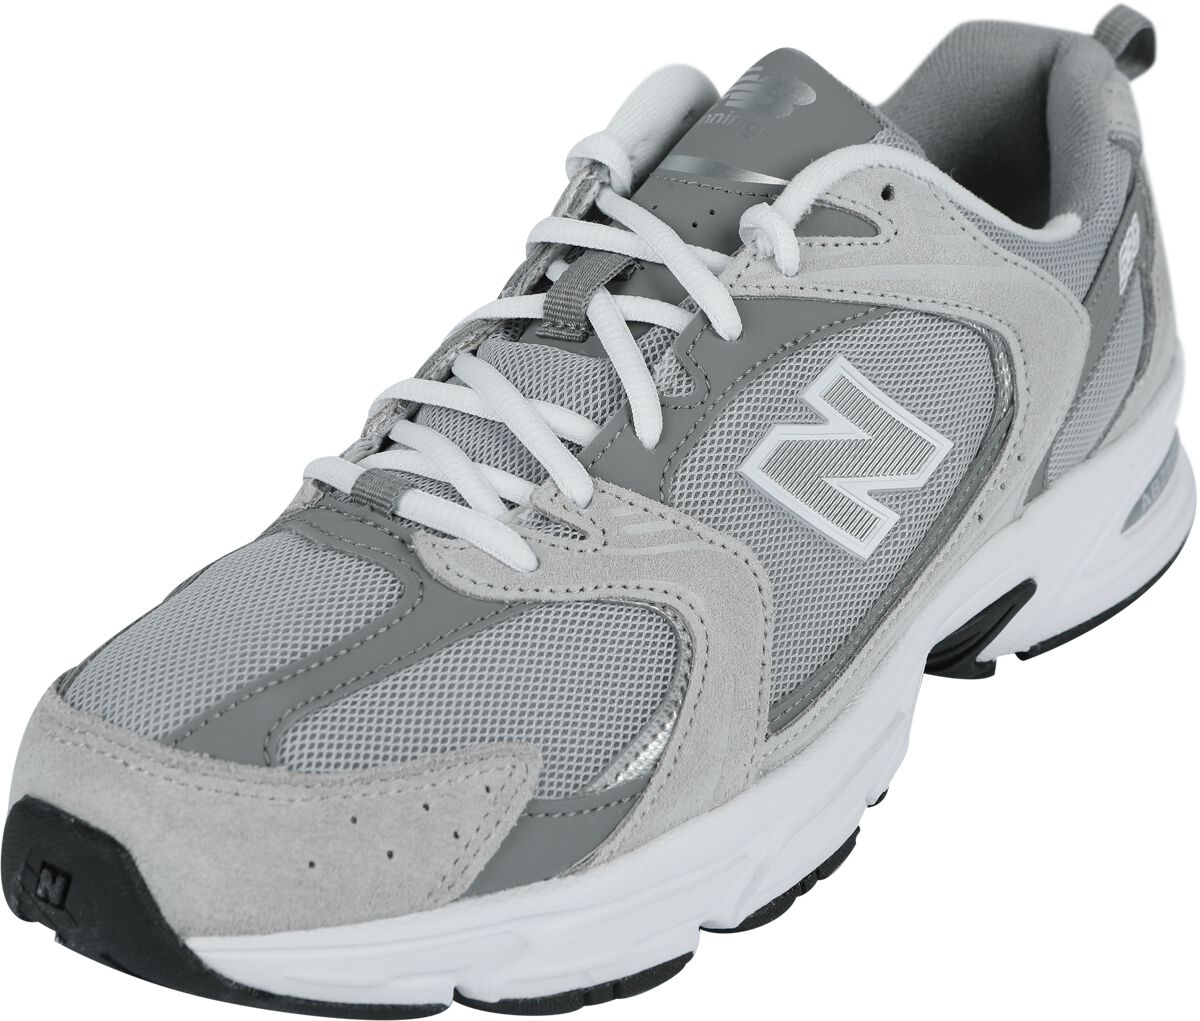 New Balance Sneaker - 530 - EU41 bis 5 - für Männer - Größe EU44 - grau